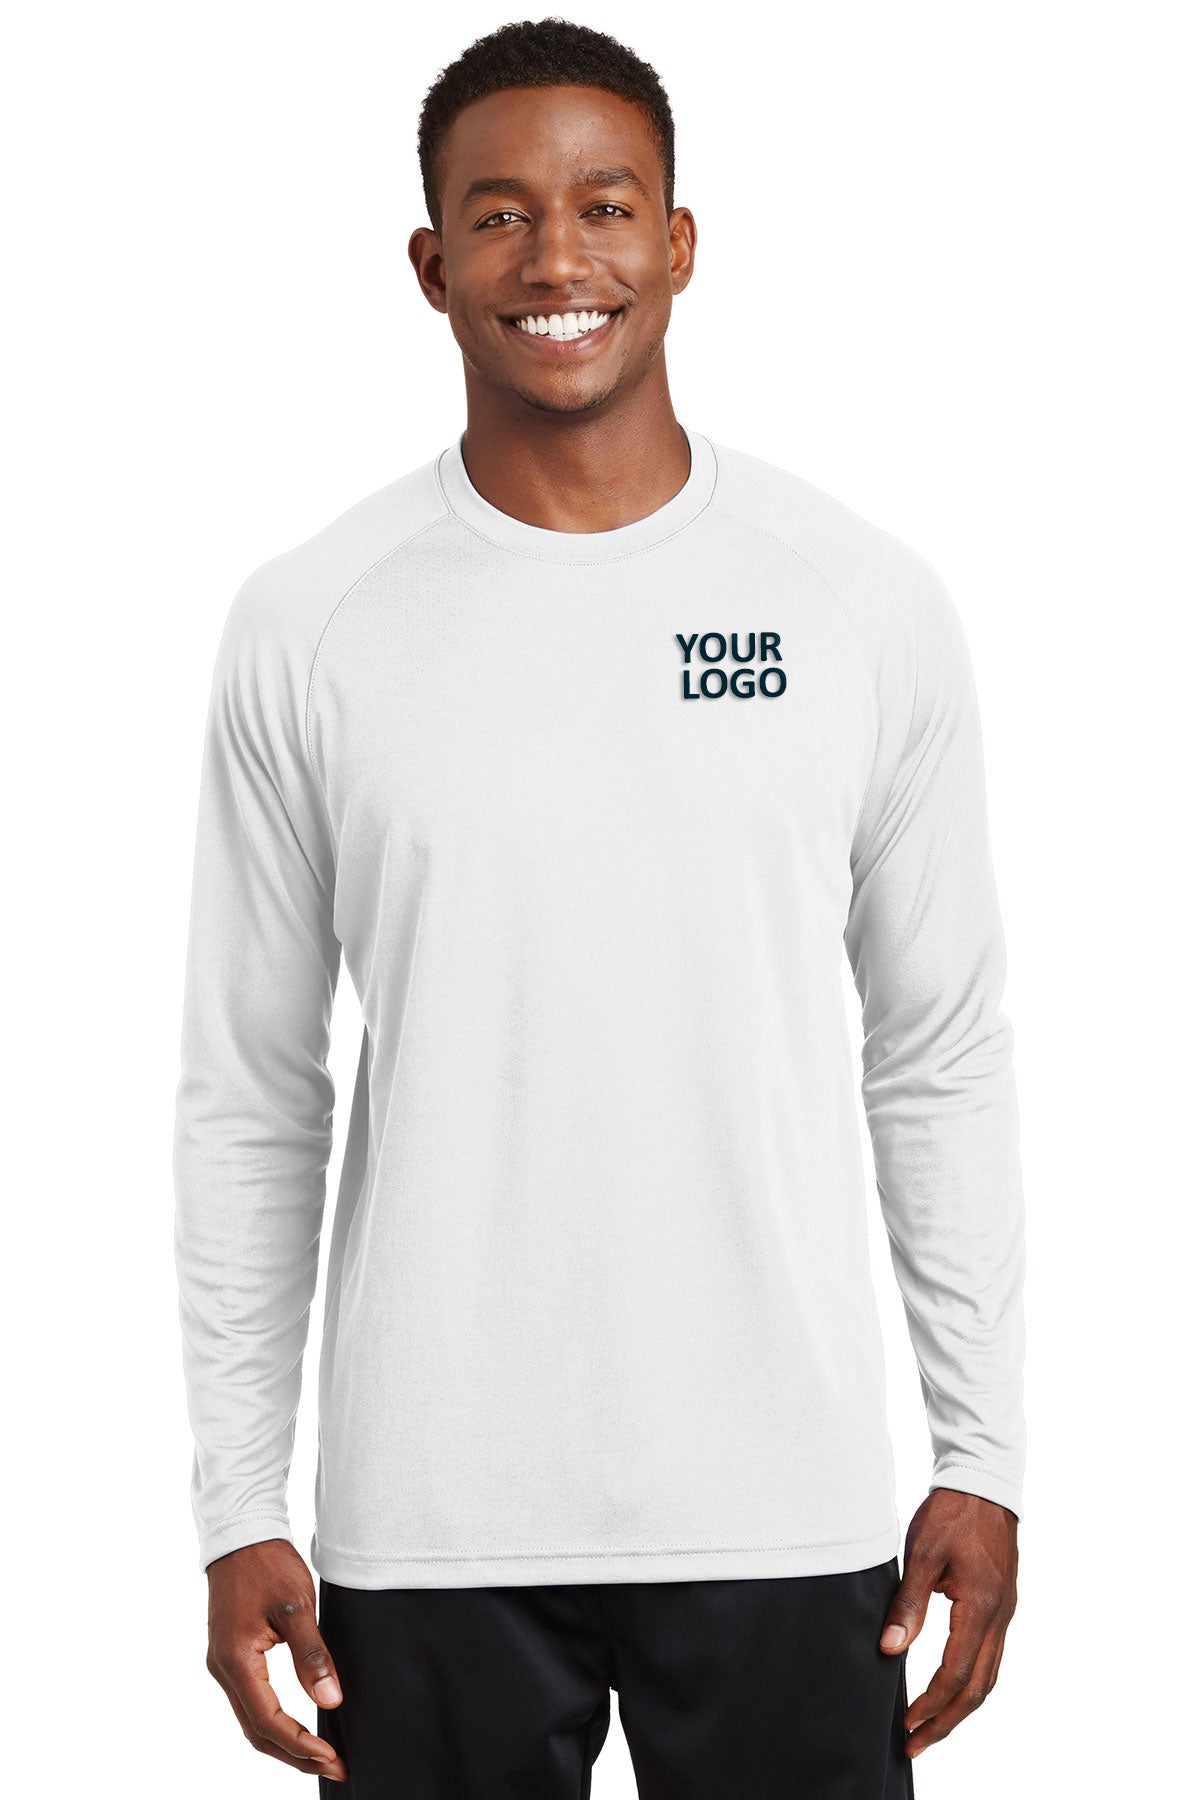 Sport-Tek Dry Zone Long Sleeve Customized Raglan T-Shirts, White